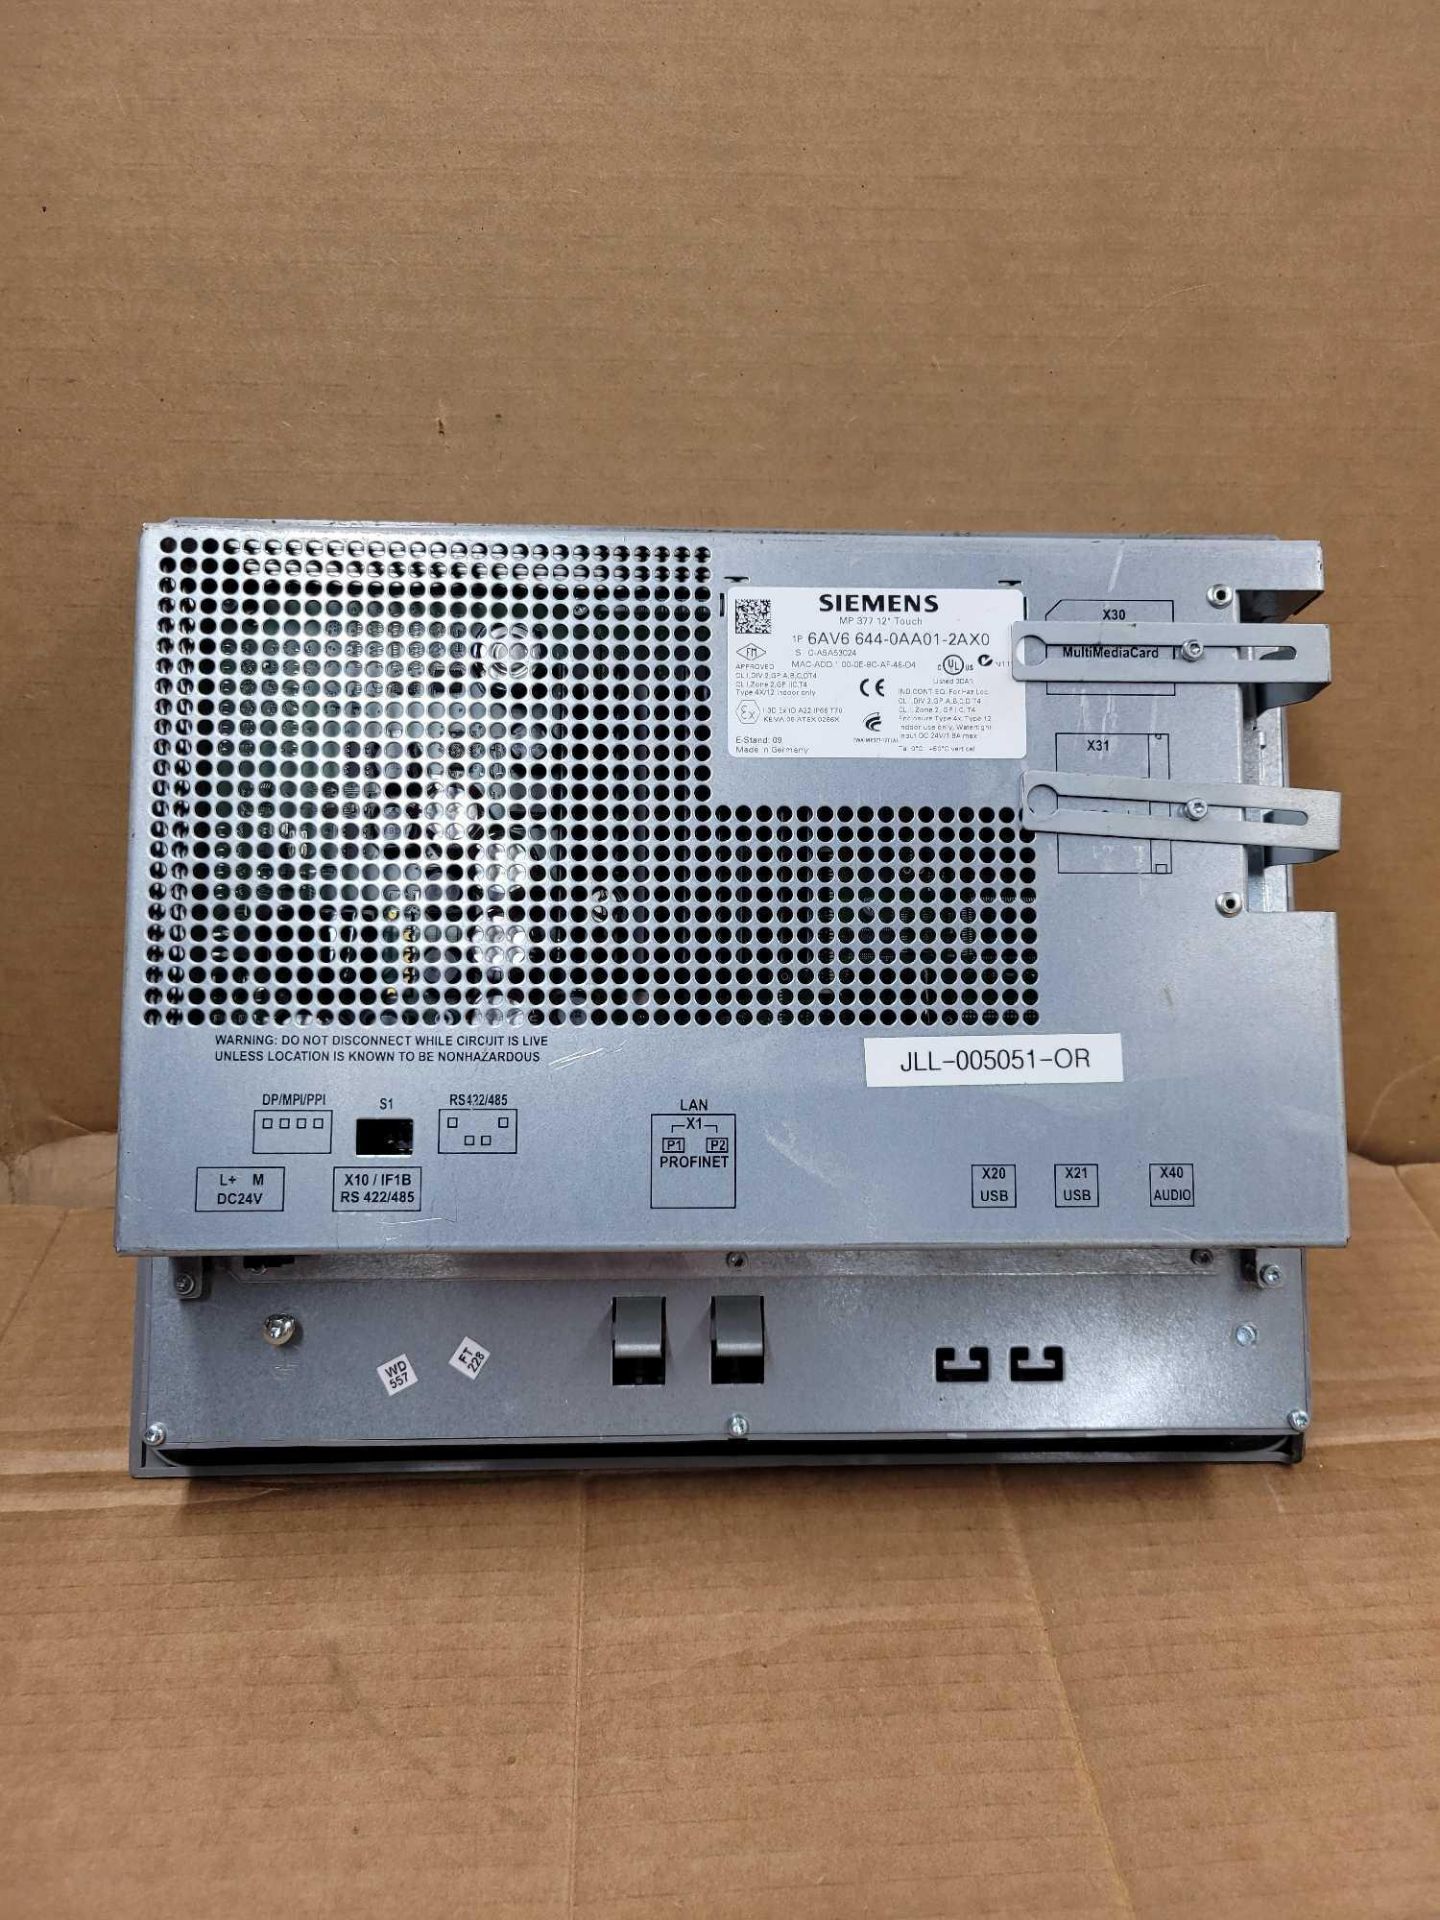 SIEMENS 6AV6644-0AA01-2AX0 / Simatic Multi Panel MP 377 12" Touch Screen Operator Interface  /  Lot - Image 2 of 5